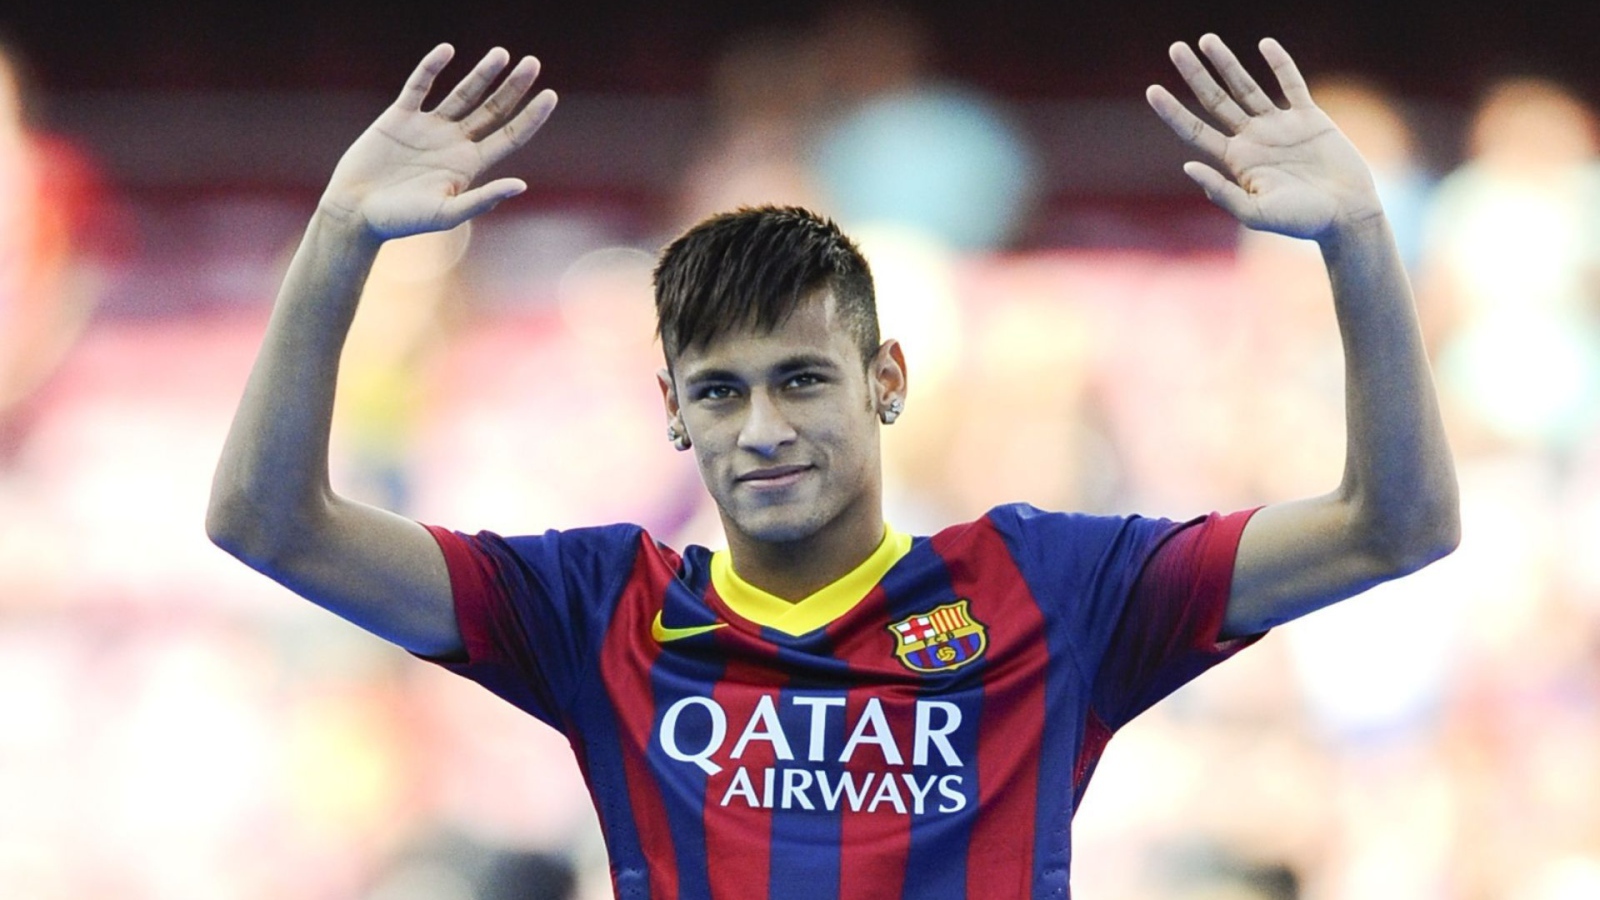 Футболист Барселоны Neymar руки вверх